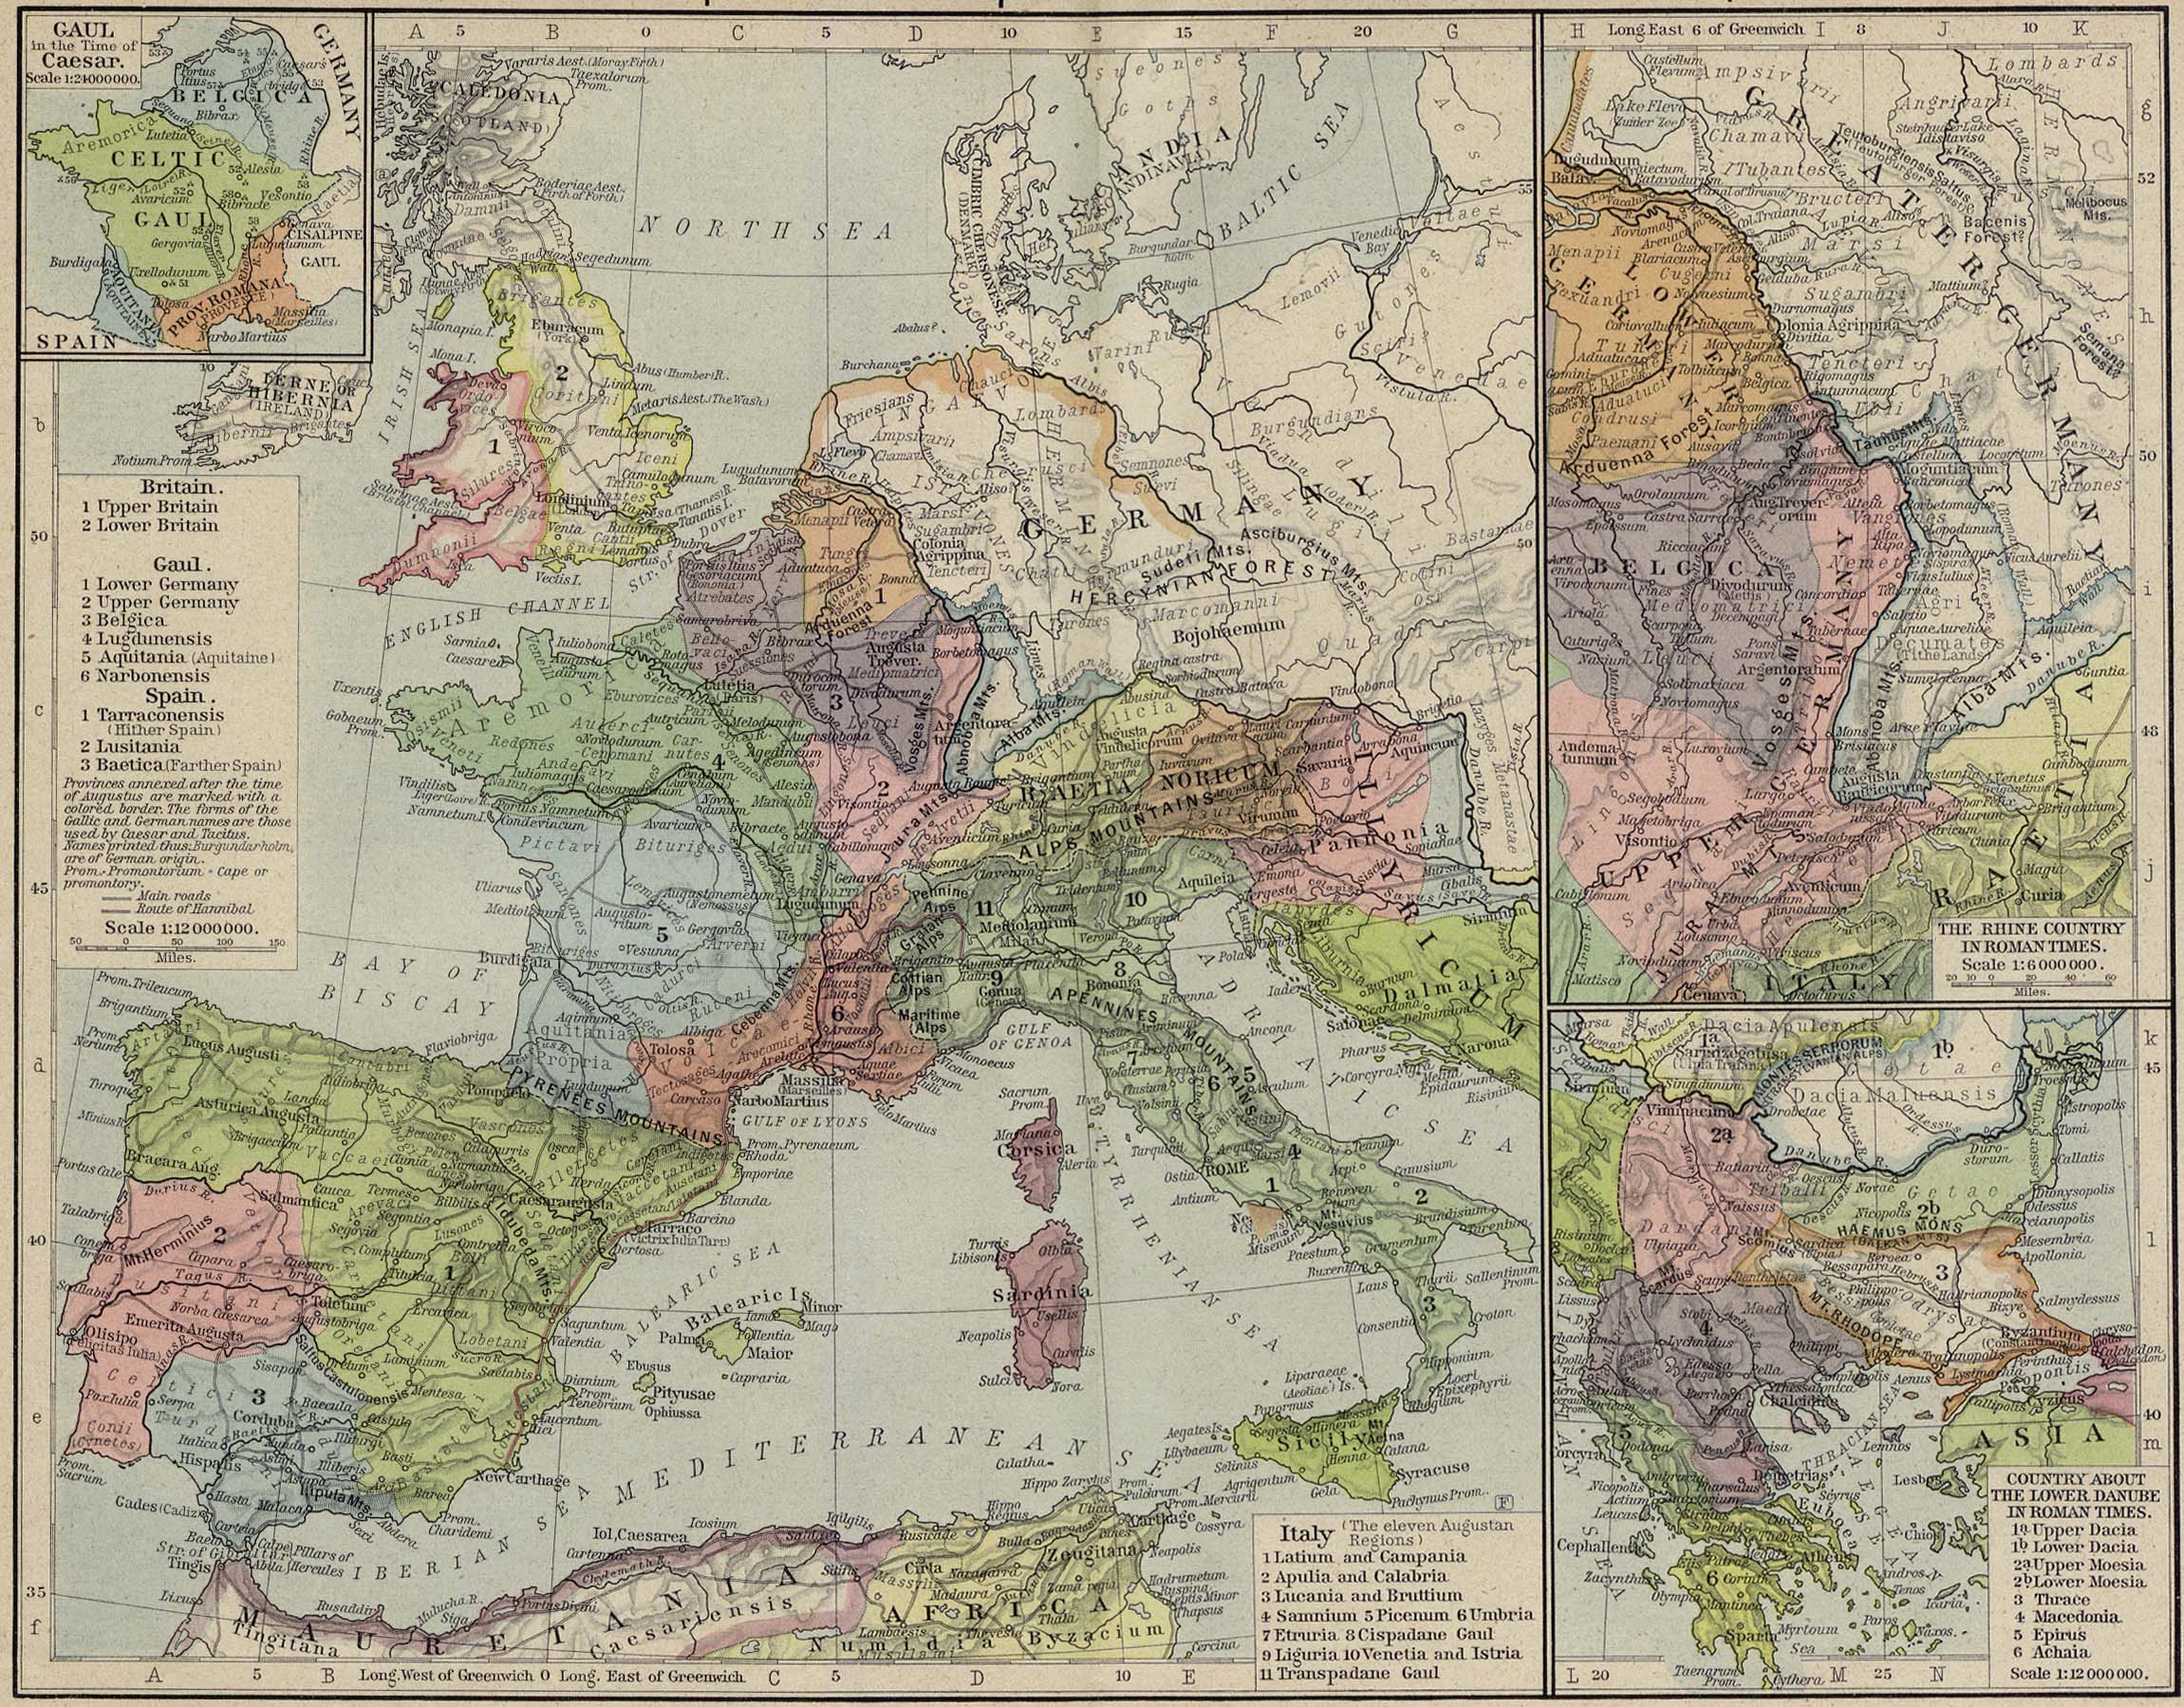 Map of the Roman Empire 117 AD